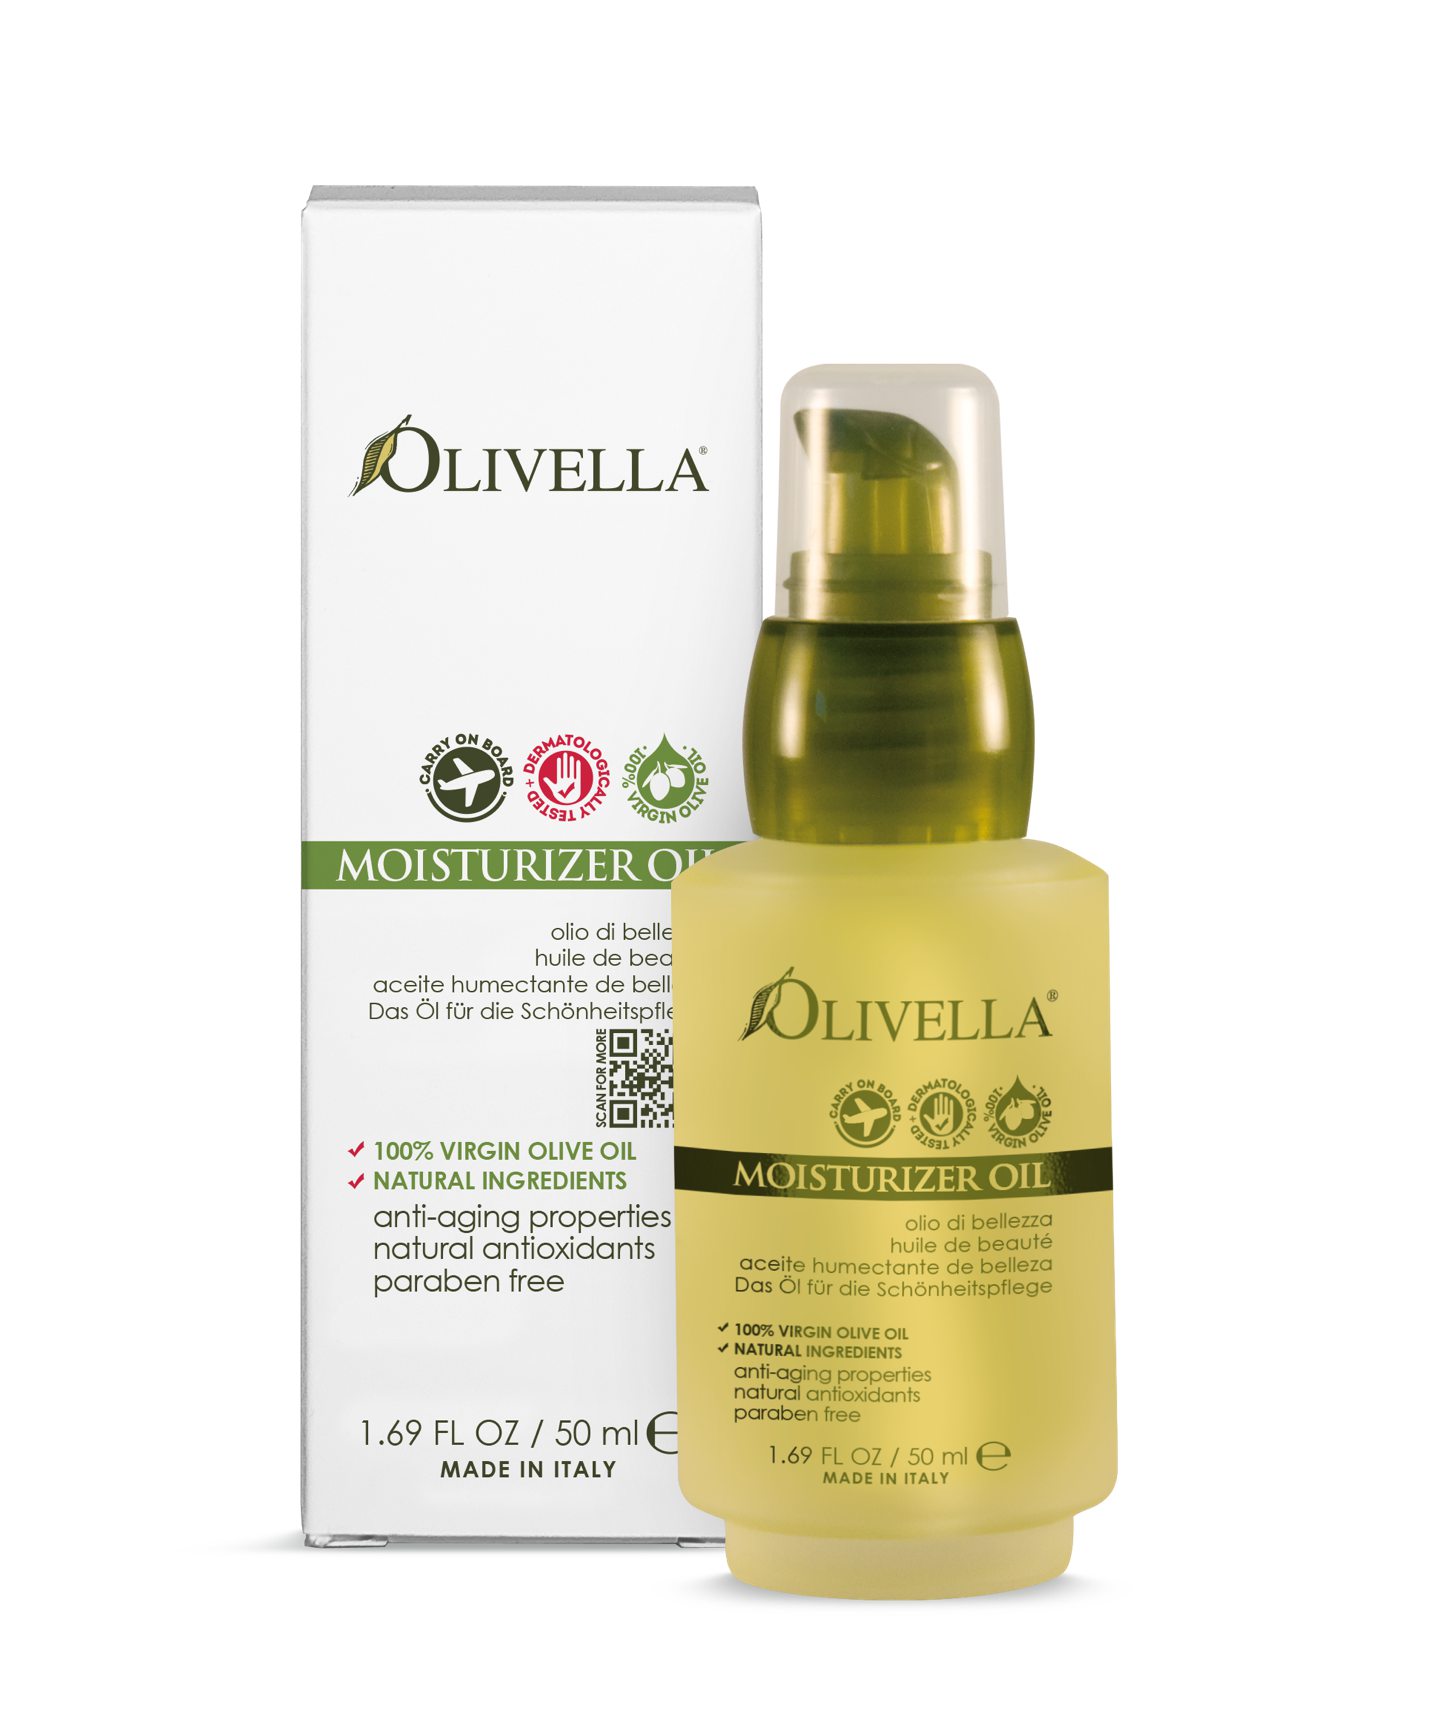  Renewalize Certified Organic Olive Oil - Dry Skin